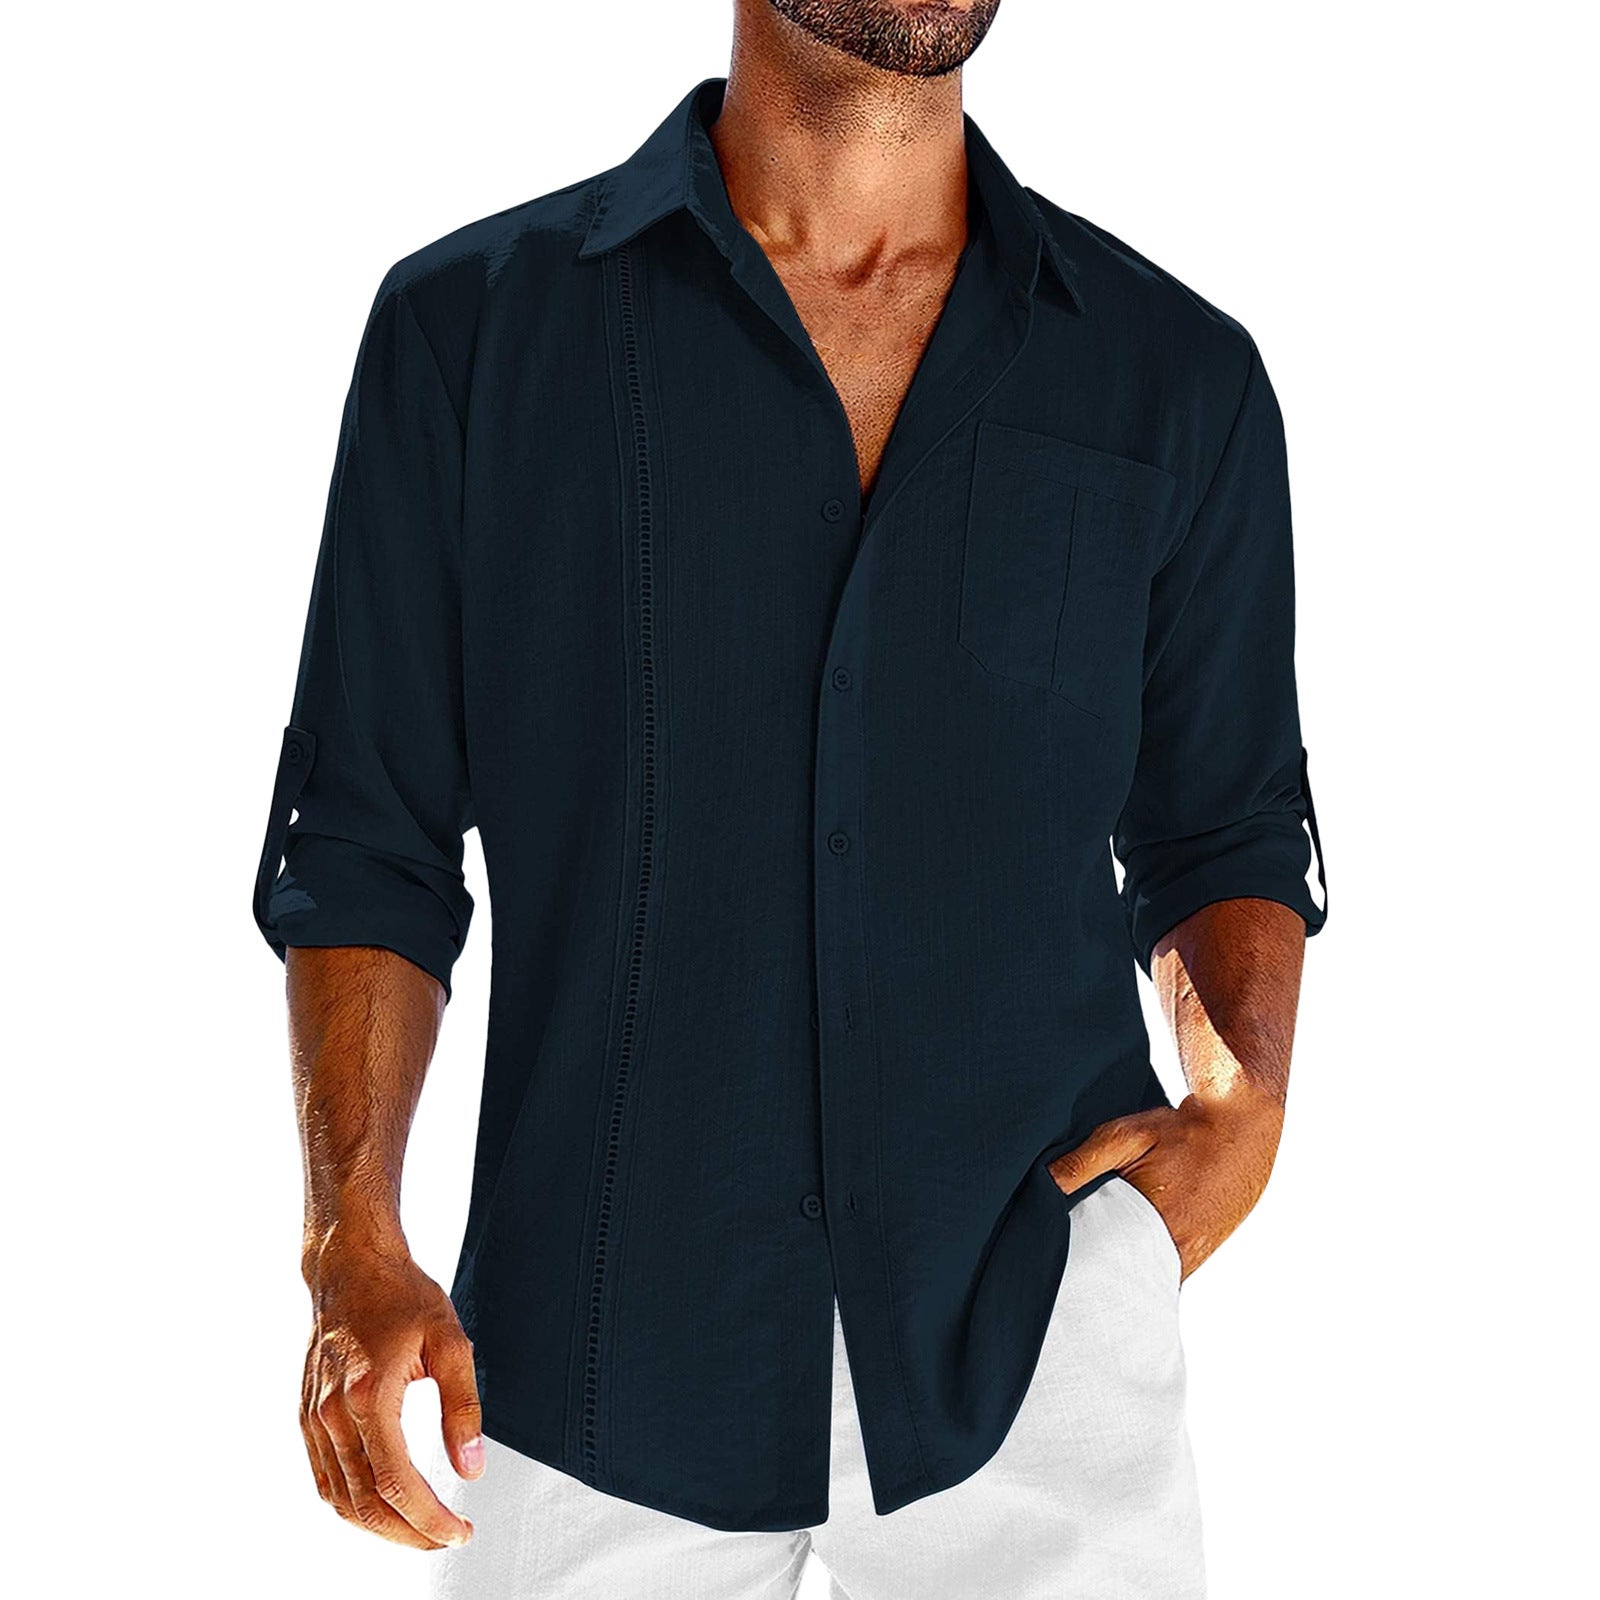 Luis | Lace Polo Pocket Shirt - Navy Blue / S - AMVIM